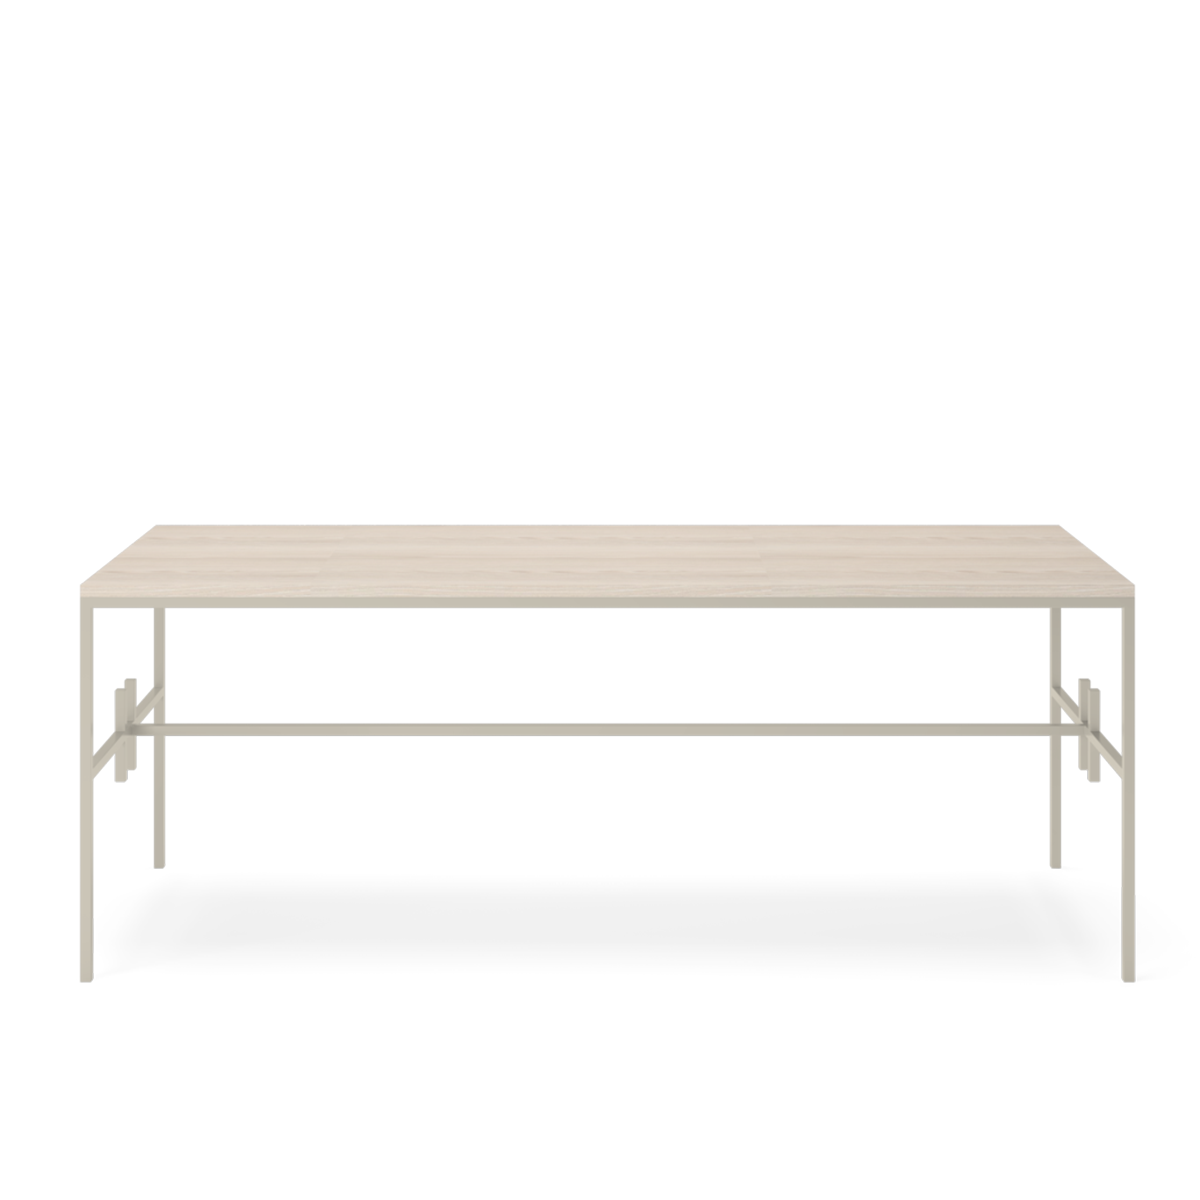 H-table - Efva Attling - The Högdalen collection